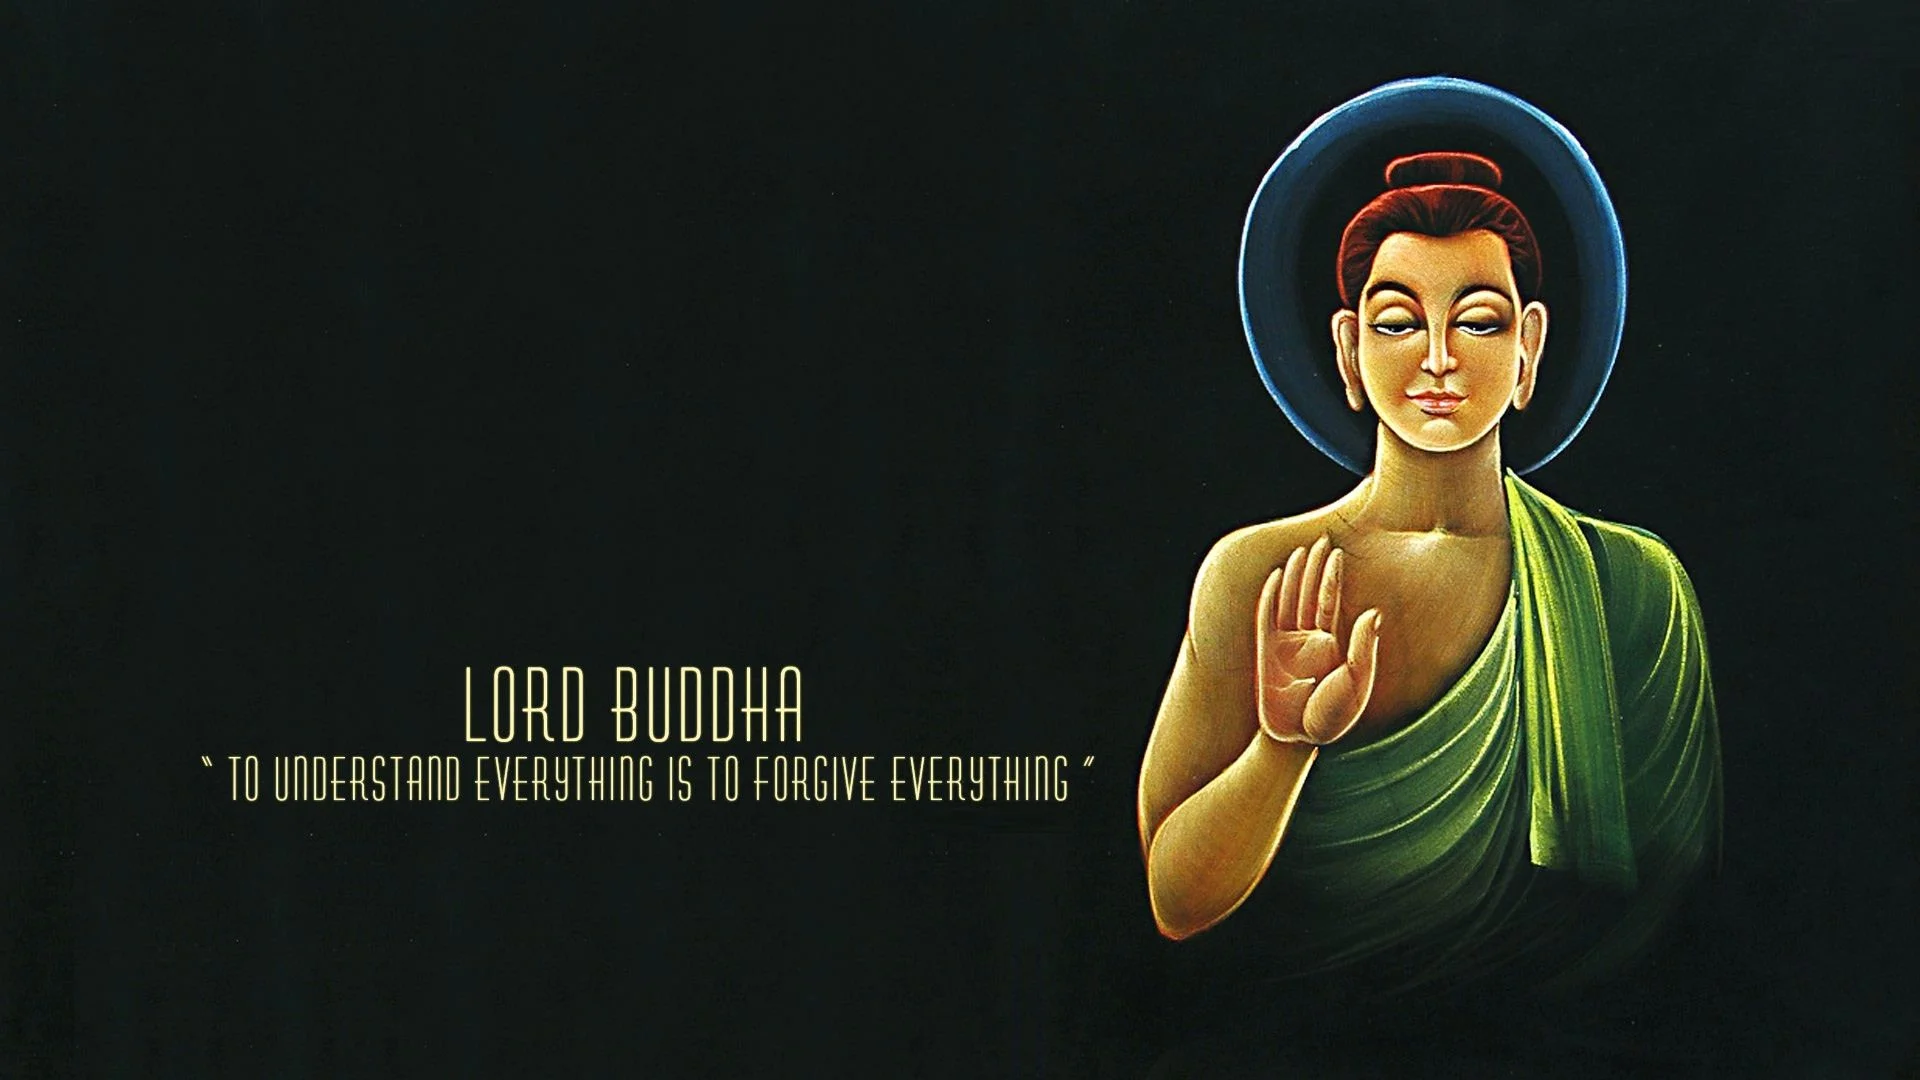 Buddha Desktop